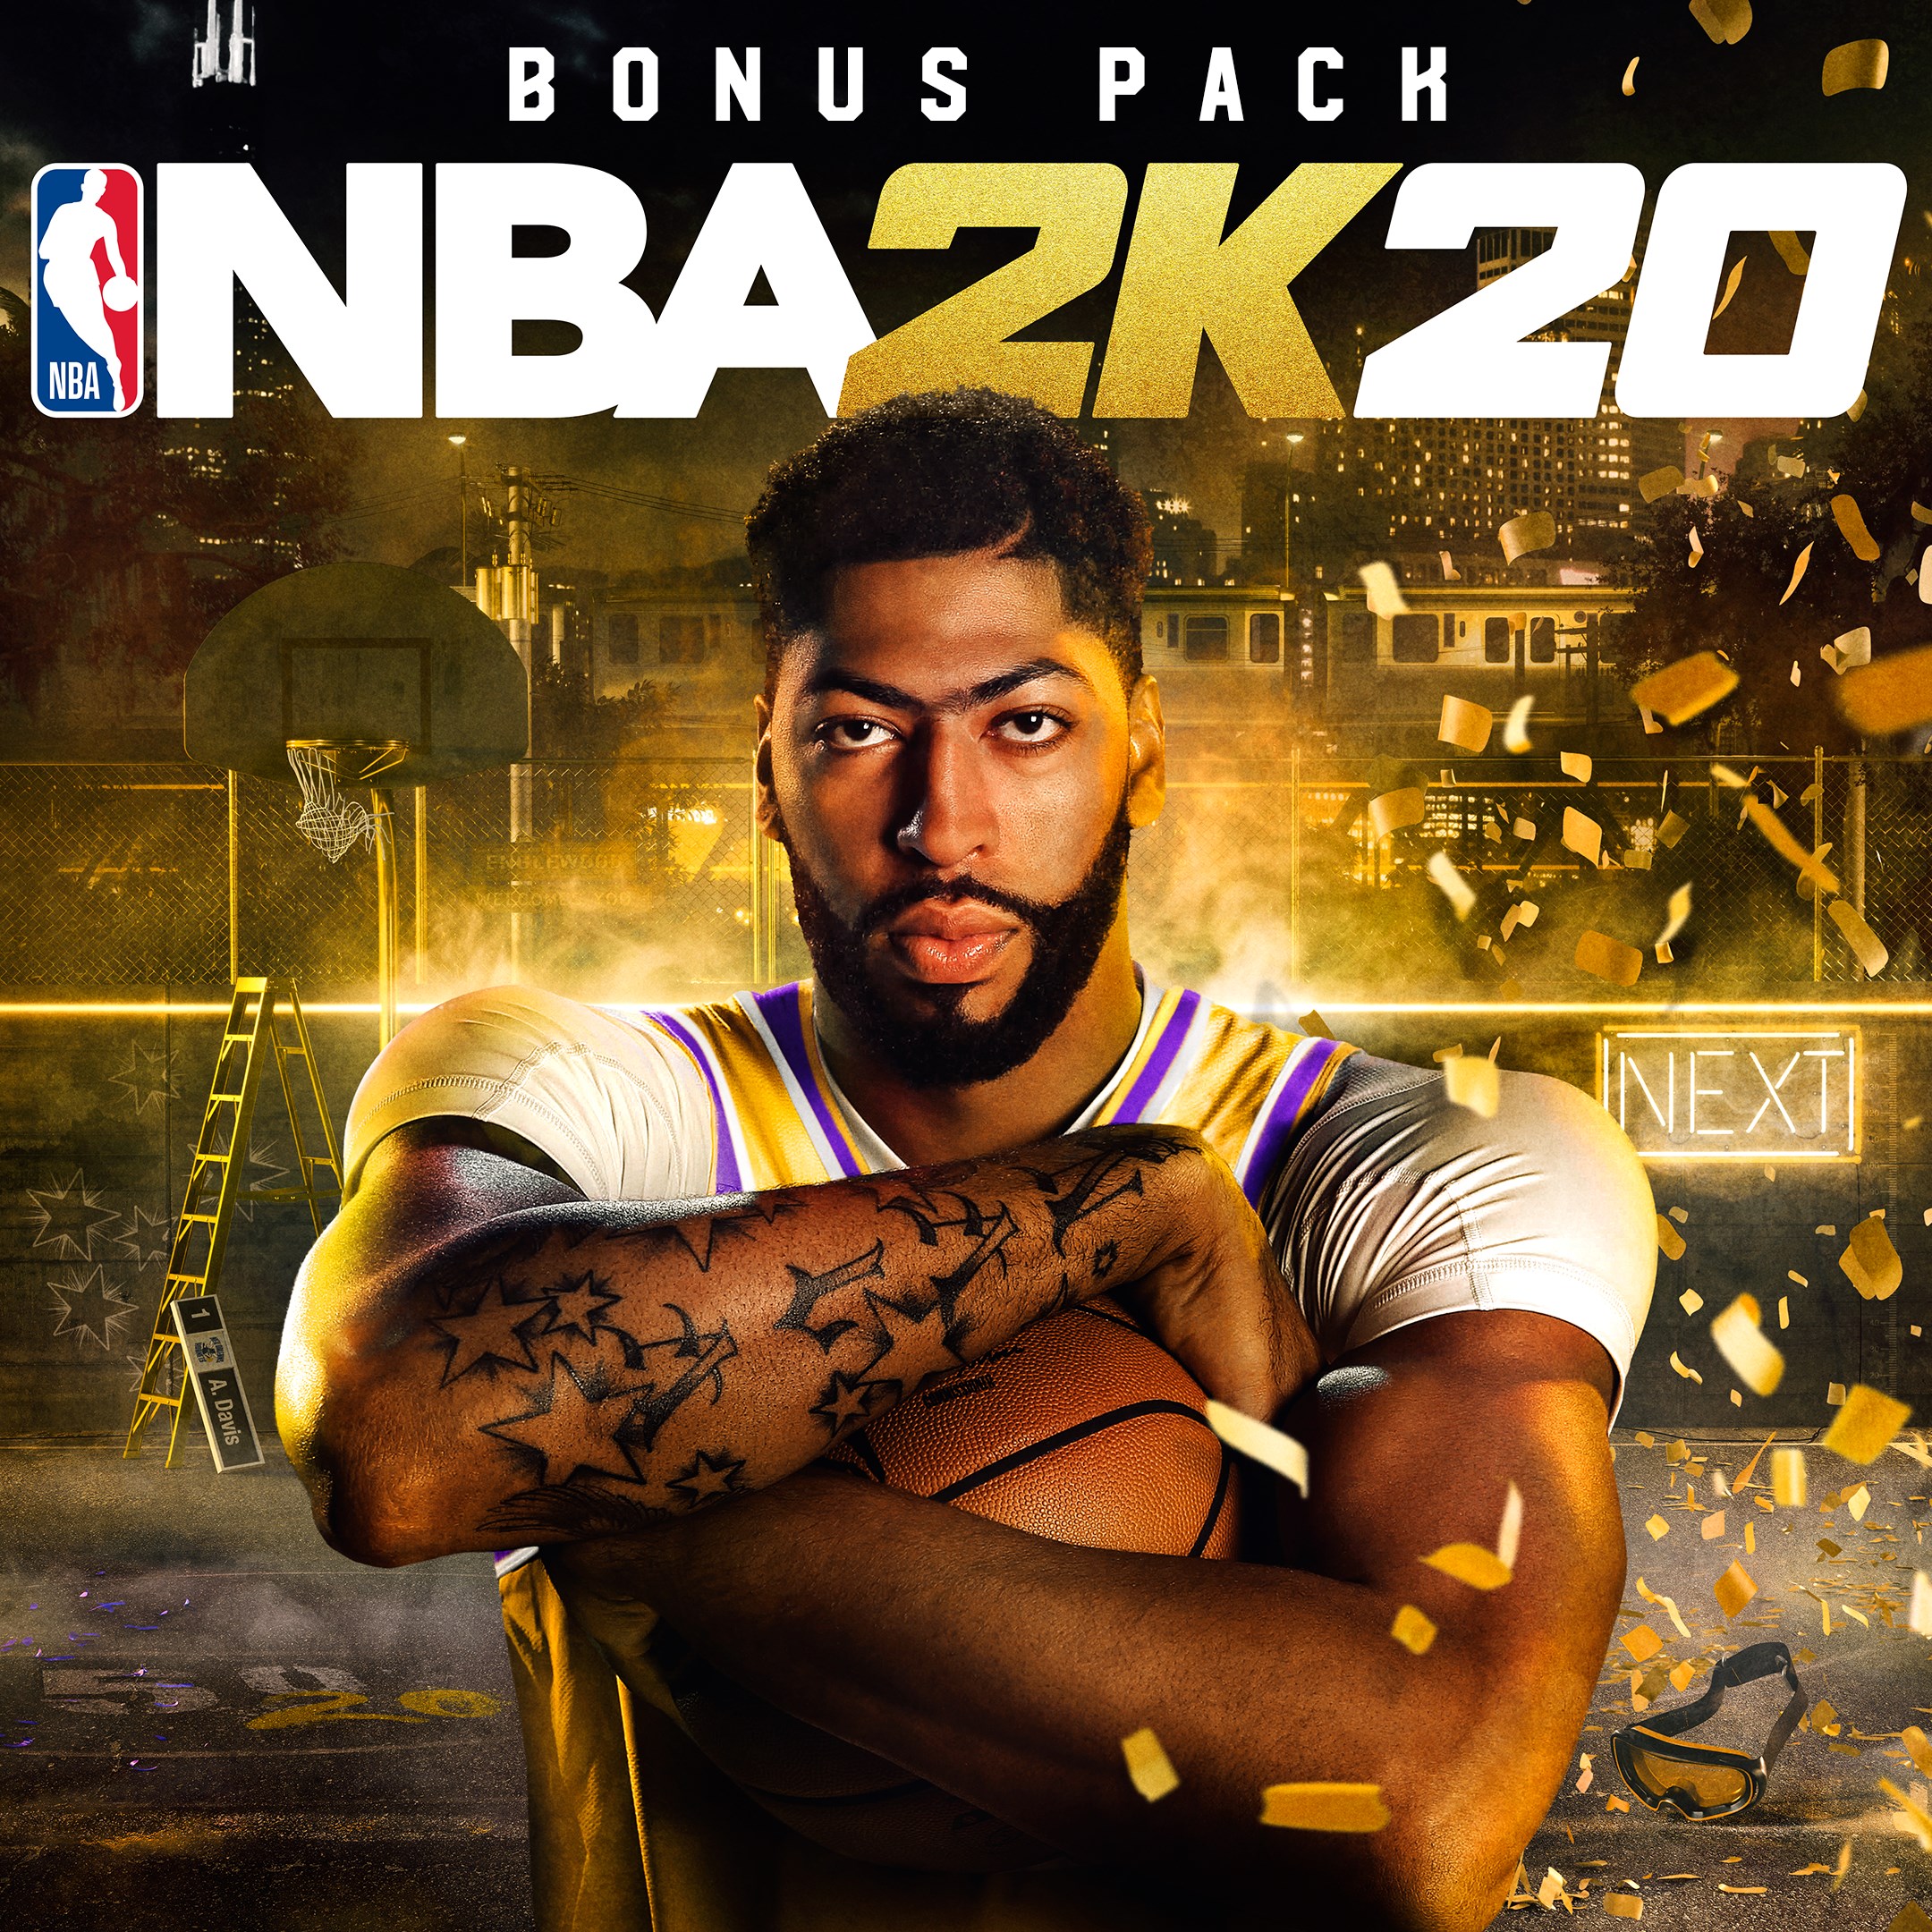 NBA 2K20 Digital Deluxe-bonus